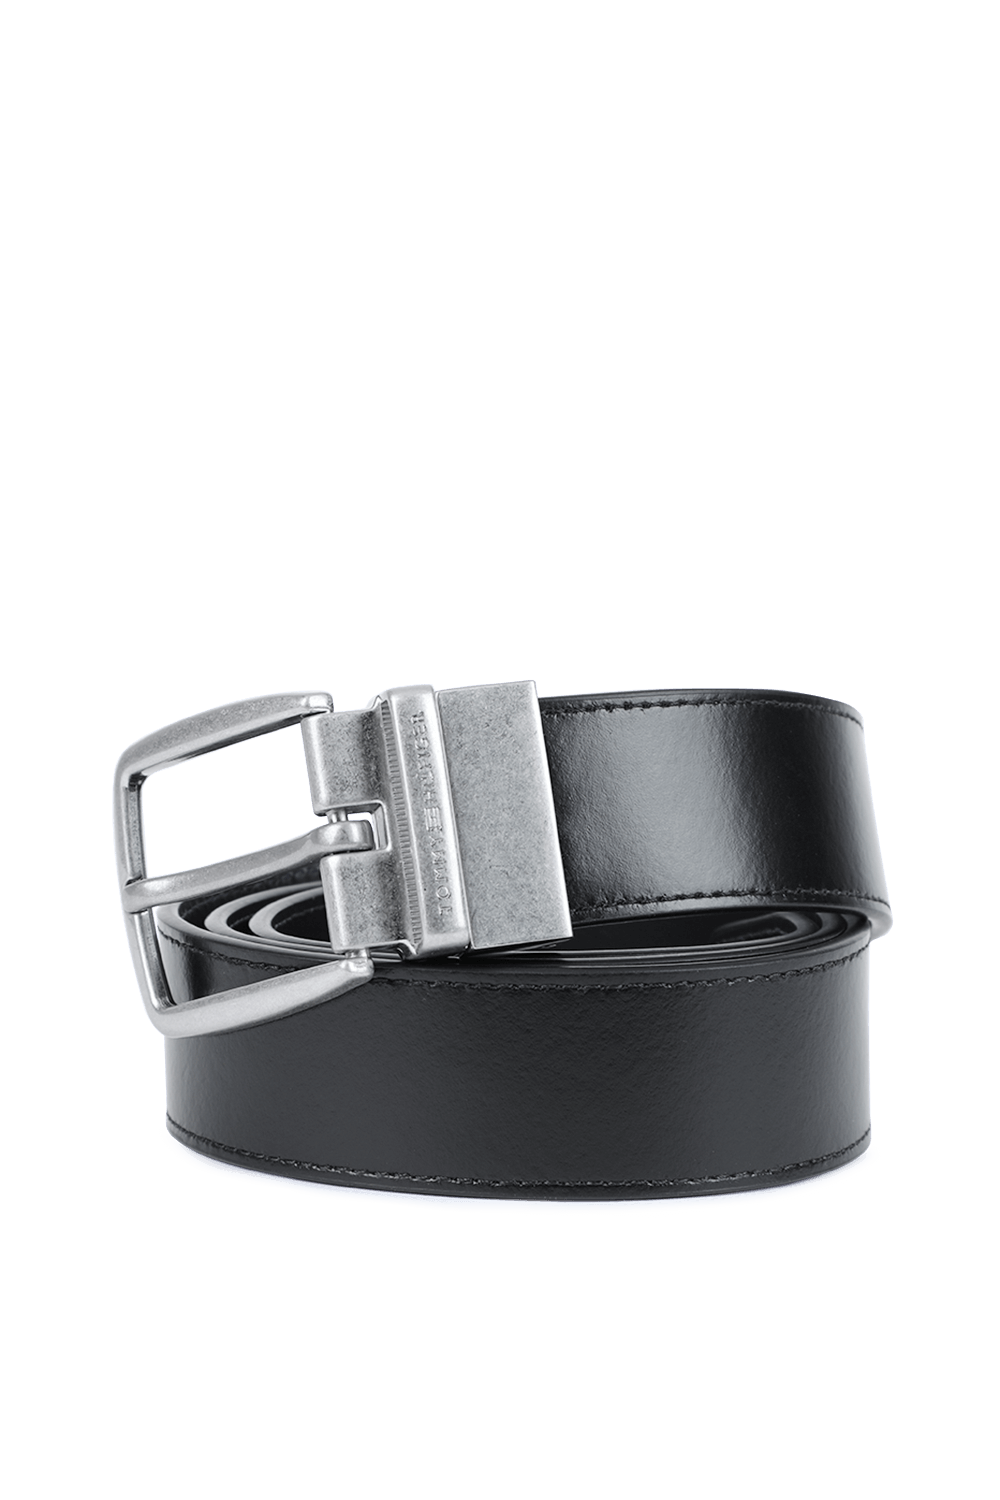 Reversible Buckle Belt in Black and Blue TOMMY HILFIGER